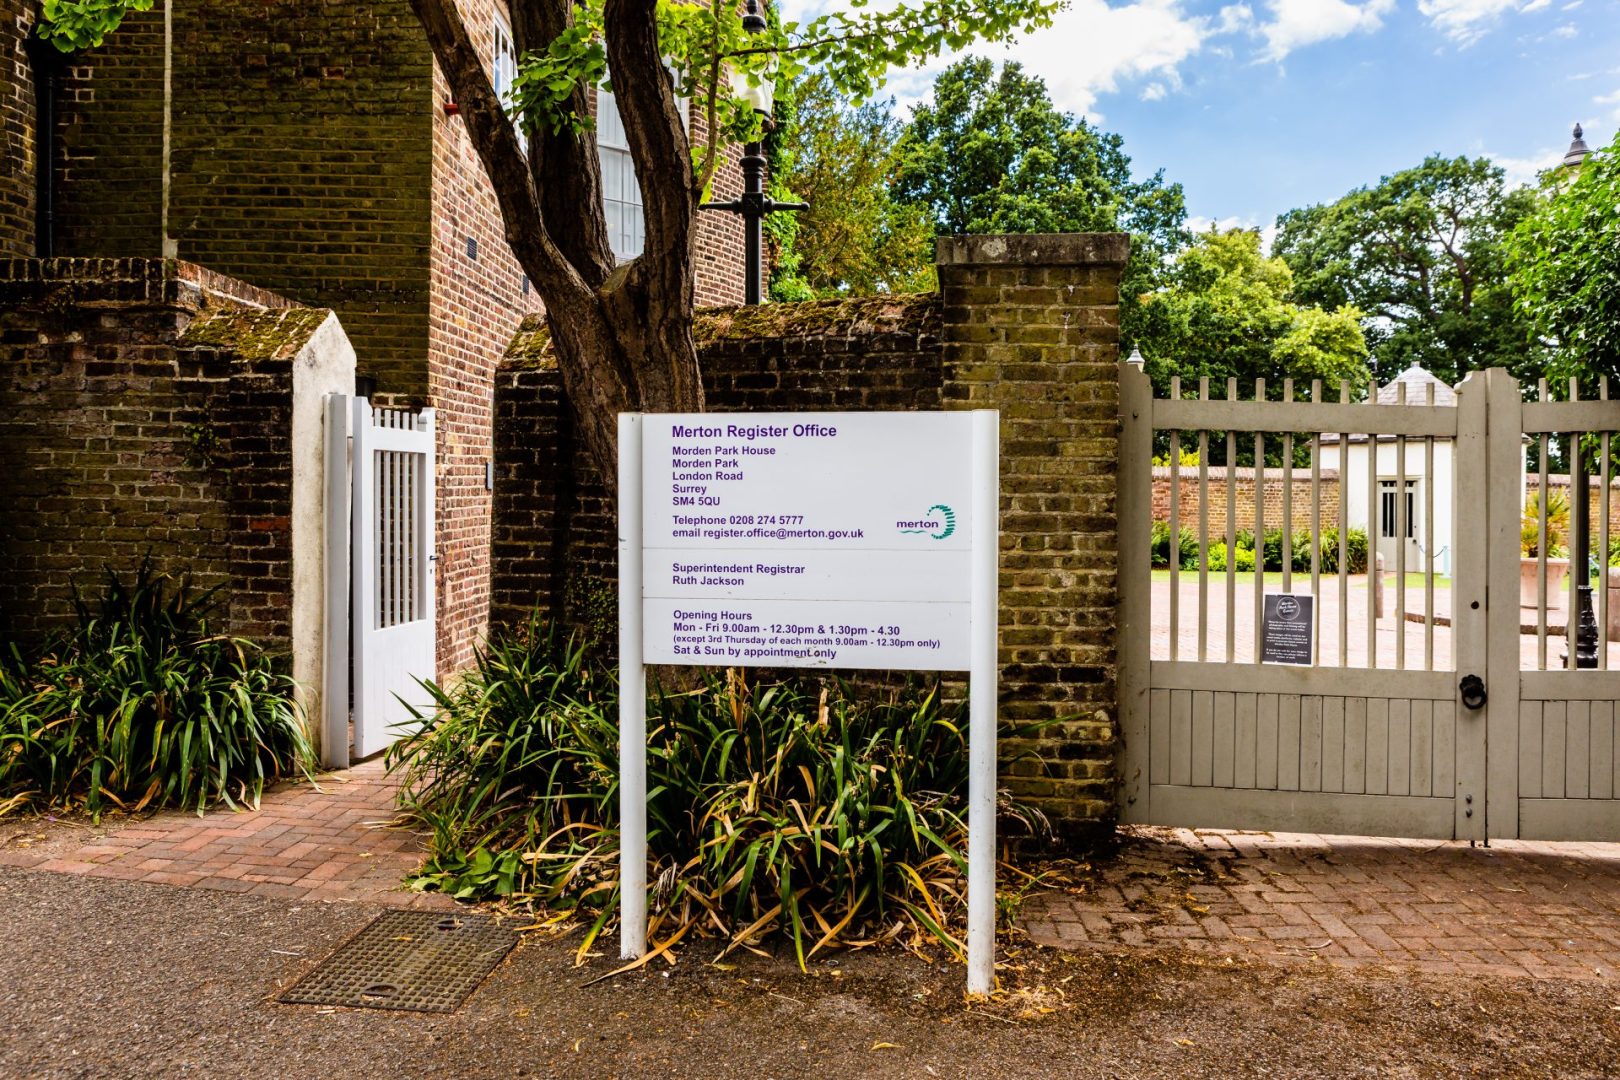 Merton Registrar Office sign at Morden Park House